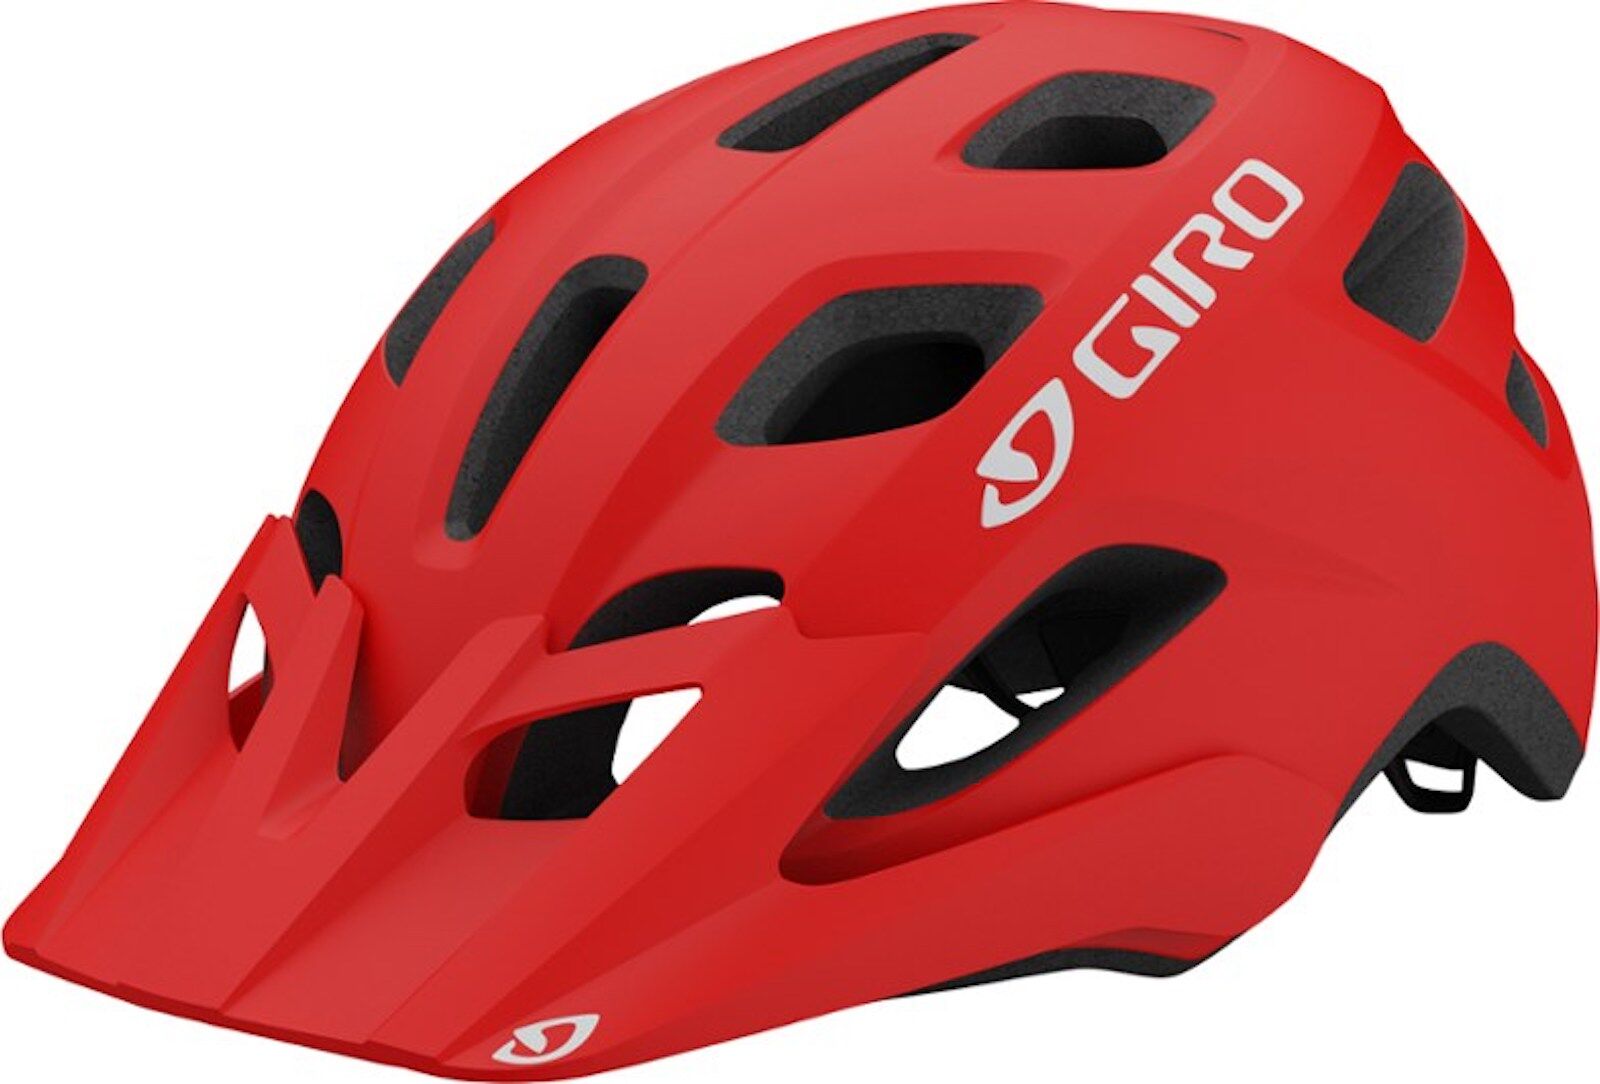 Mens mountain bike gear - Giro helmet